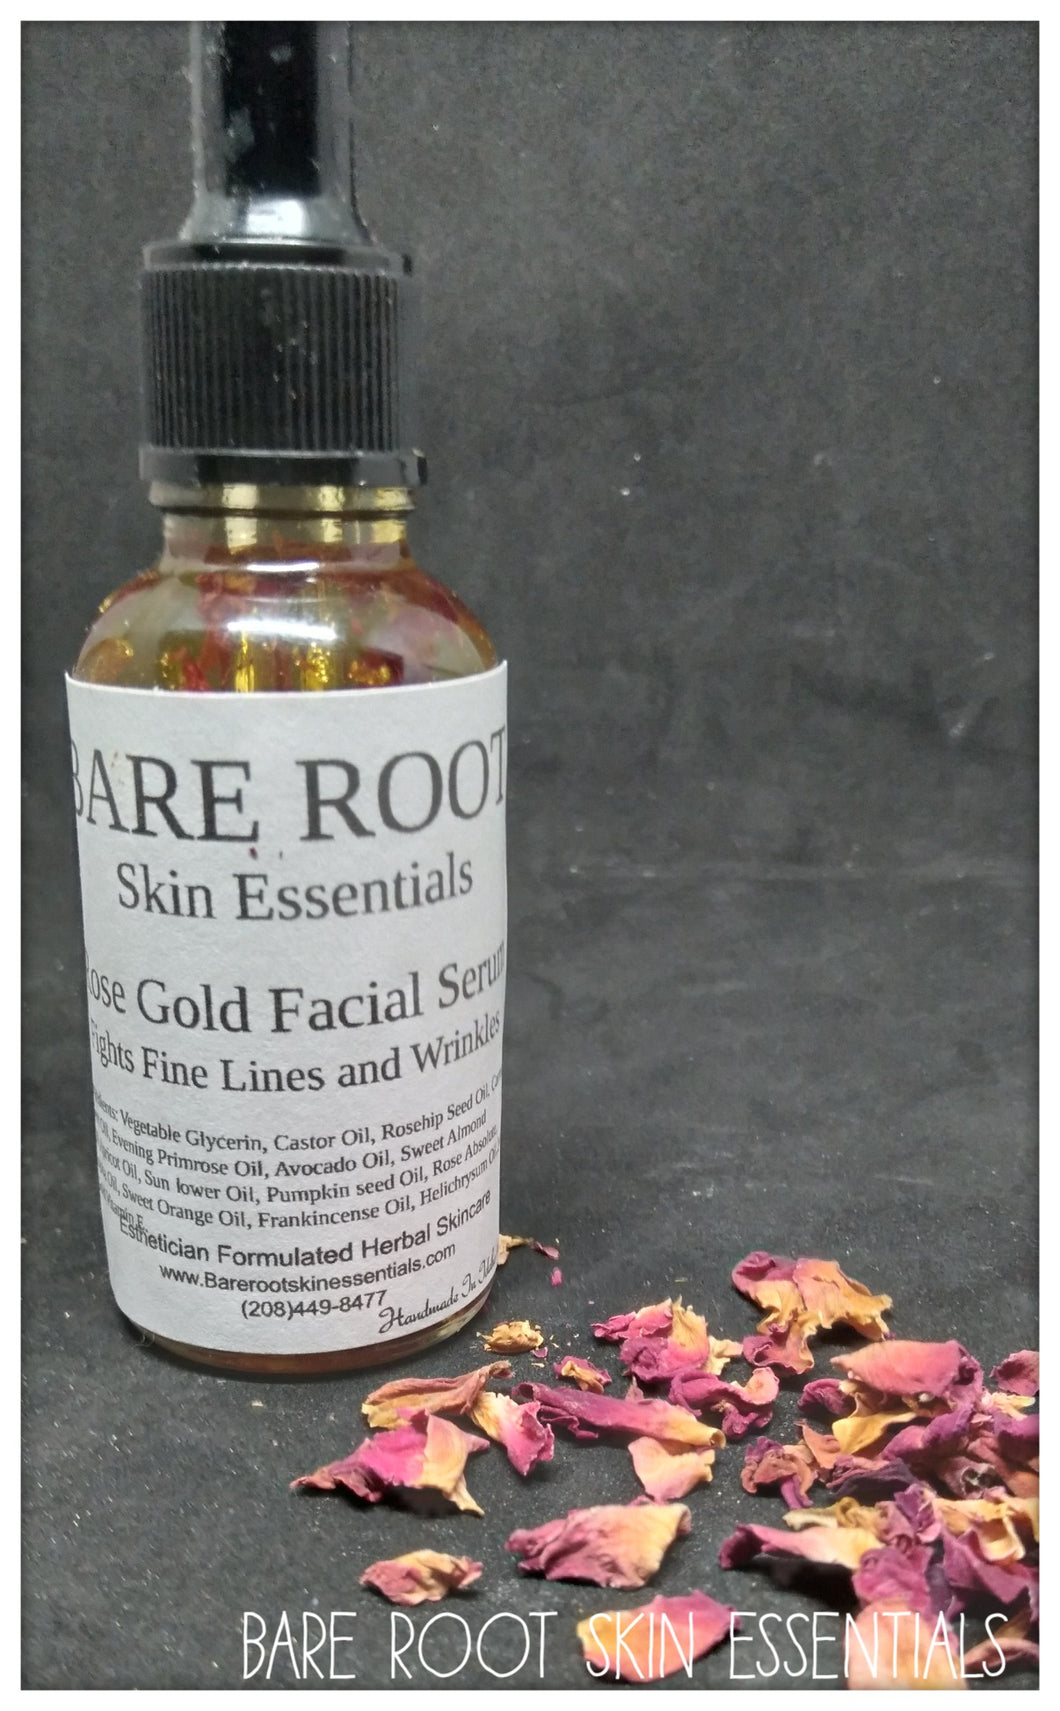 Rose Gold Facial Serum with 24k gold